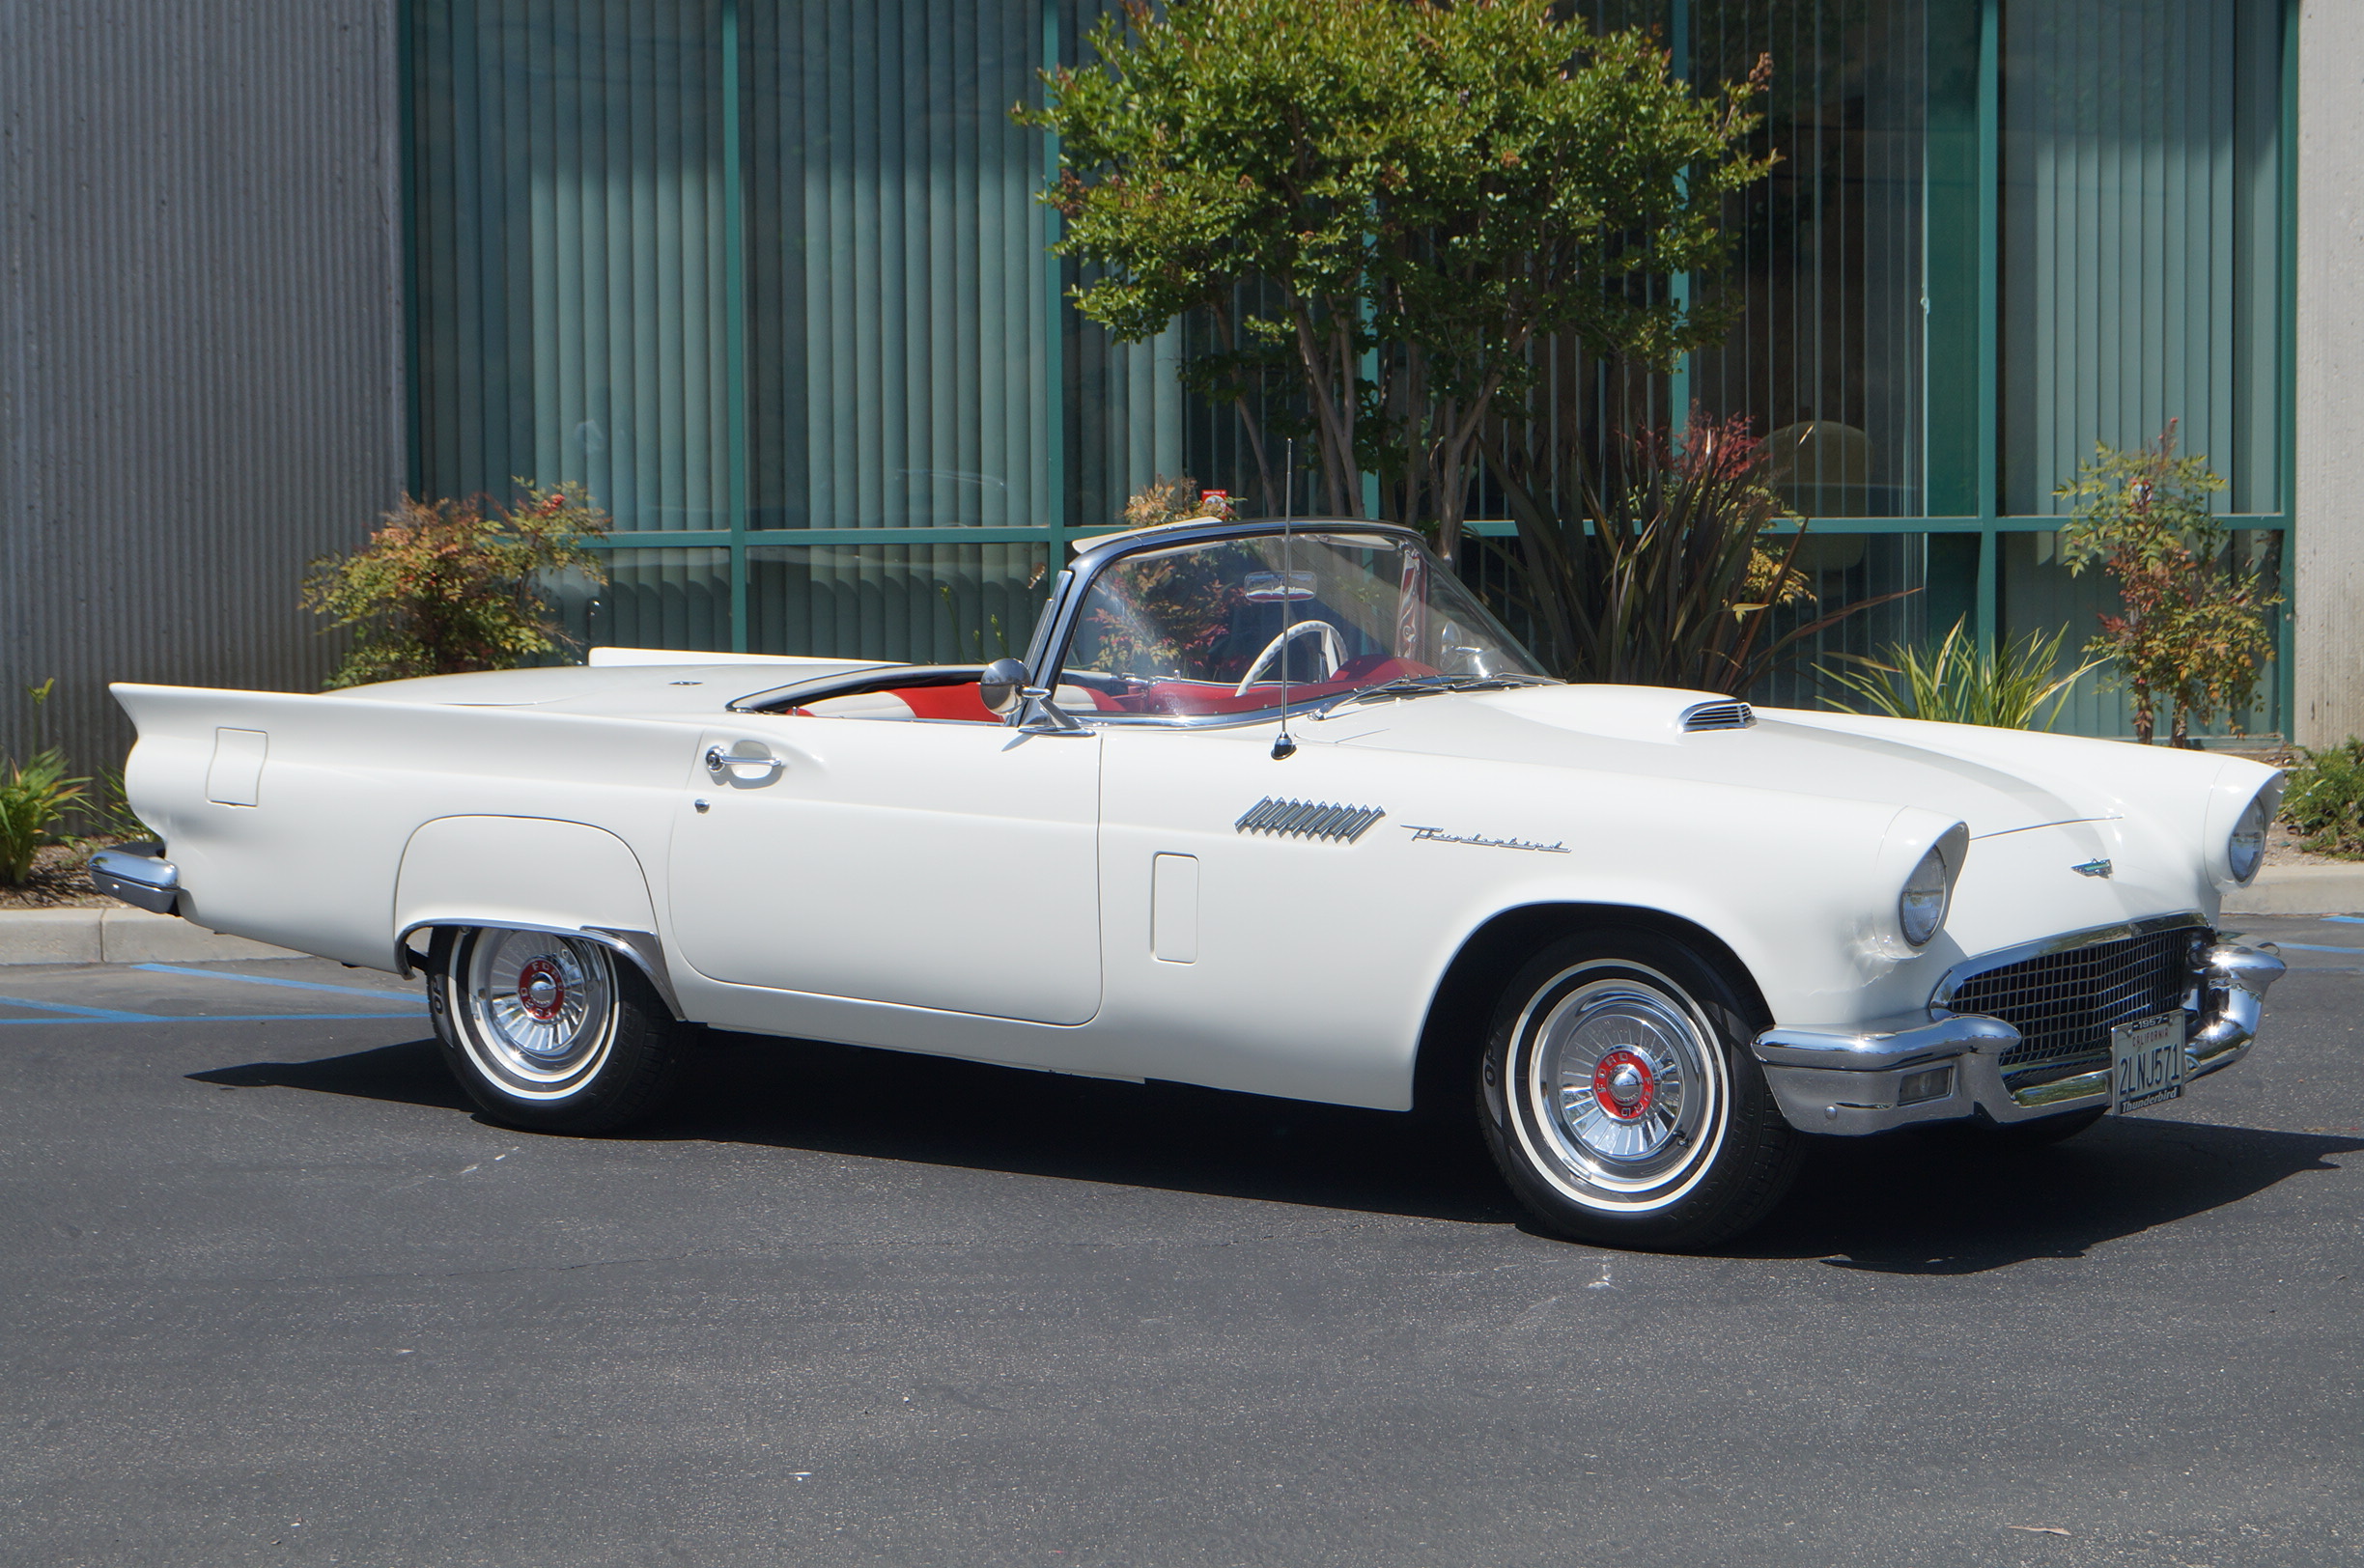 White 1957 Ford Thunderbird - Sold at Johnston Motorsports